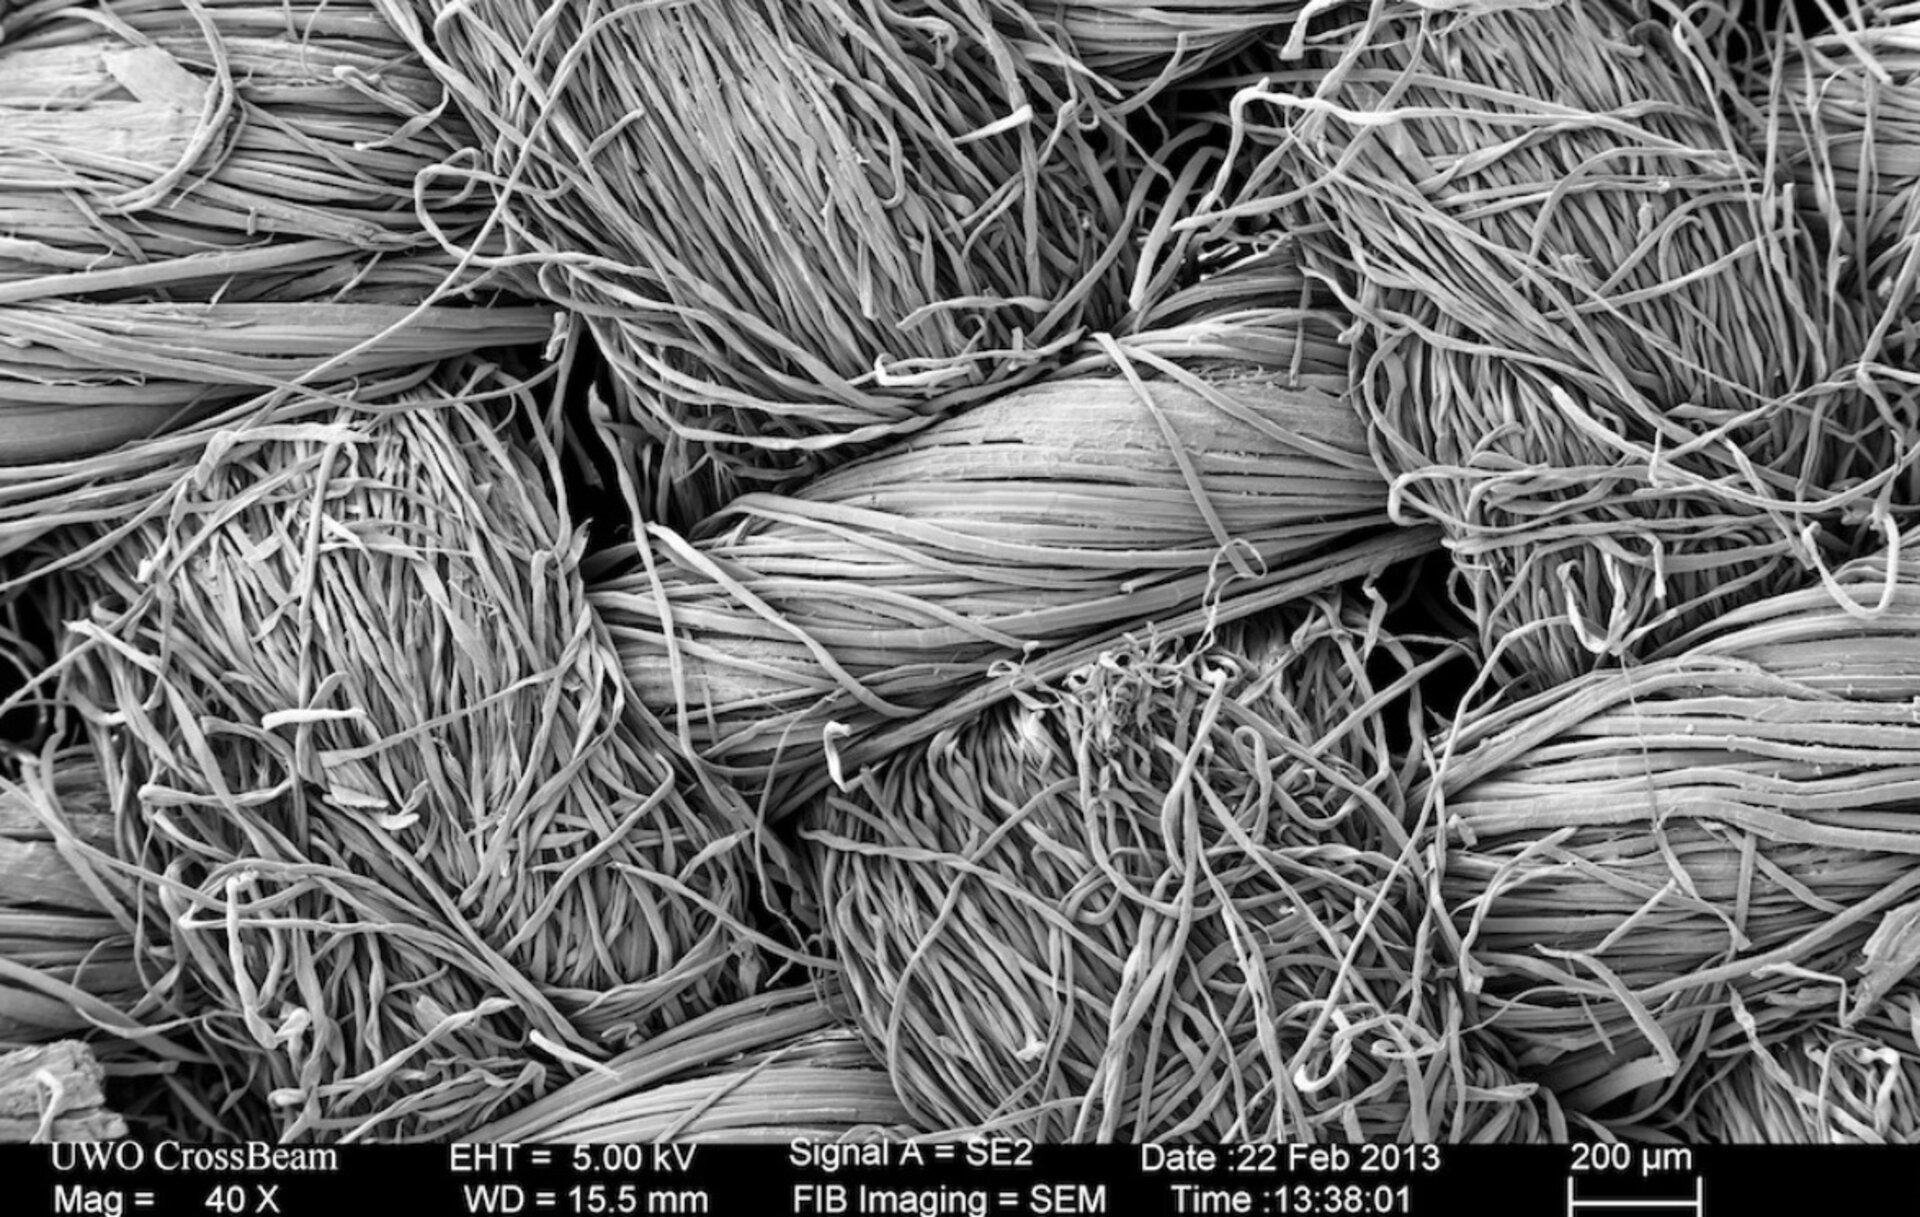 Microscopic view of textile